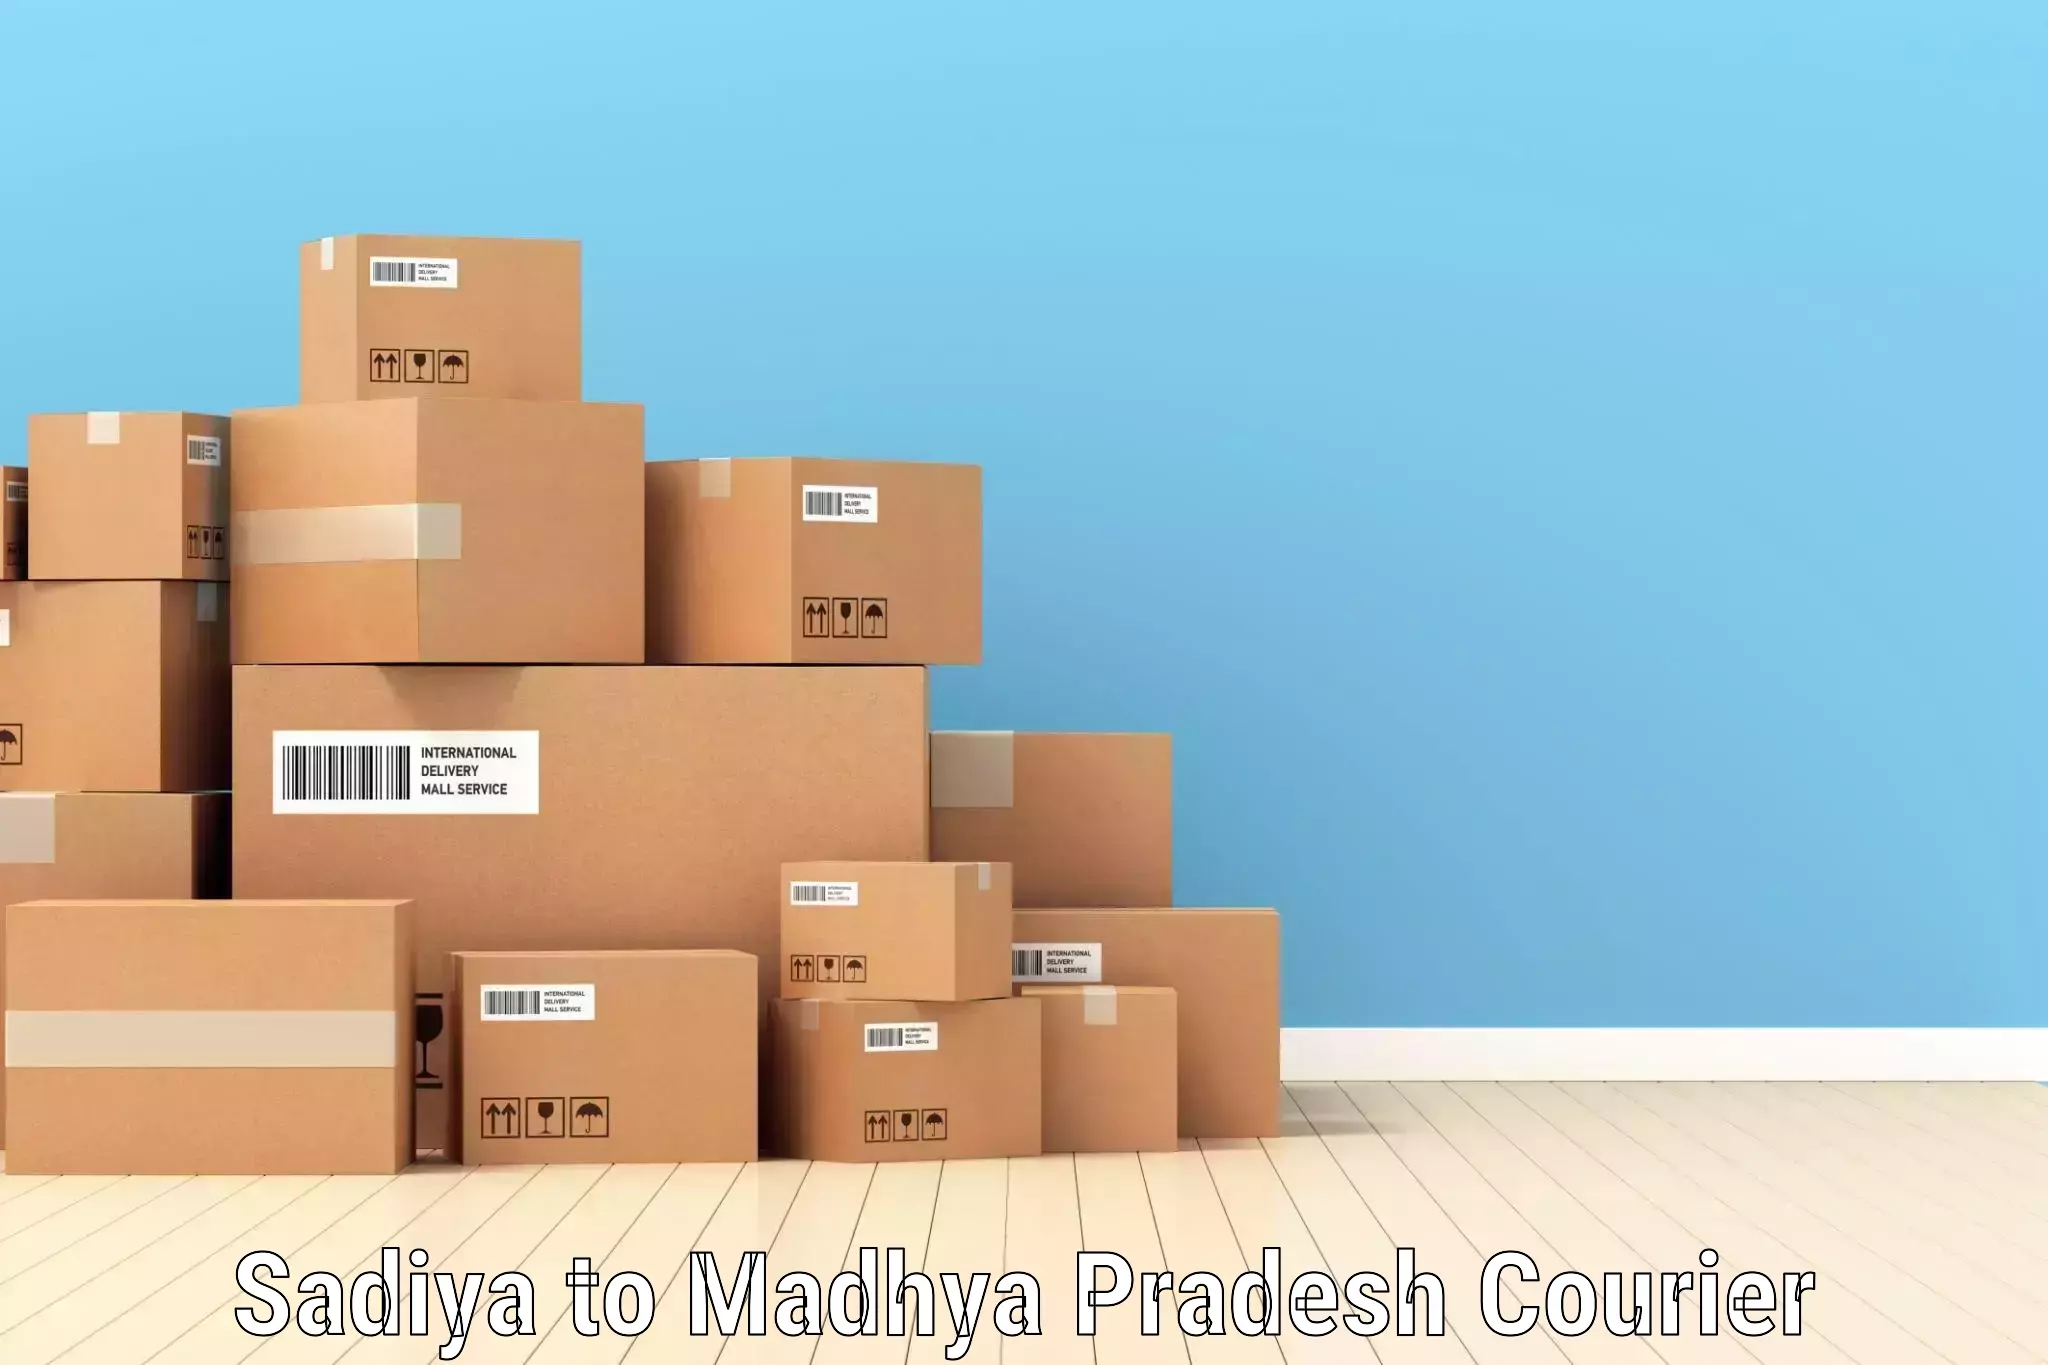 Flexible delivery schedules Sadiya to Jabalpur